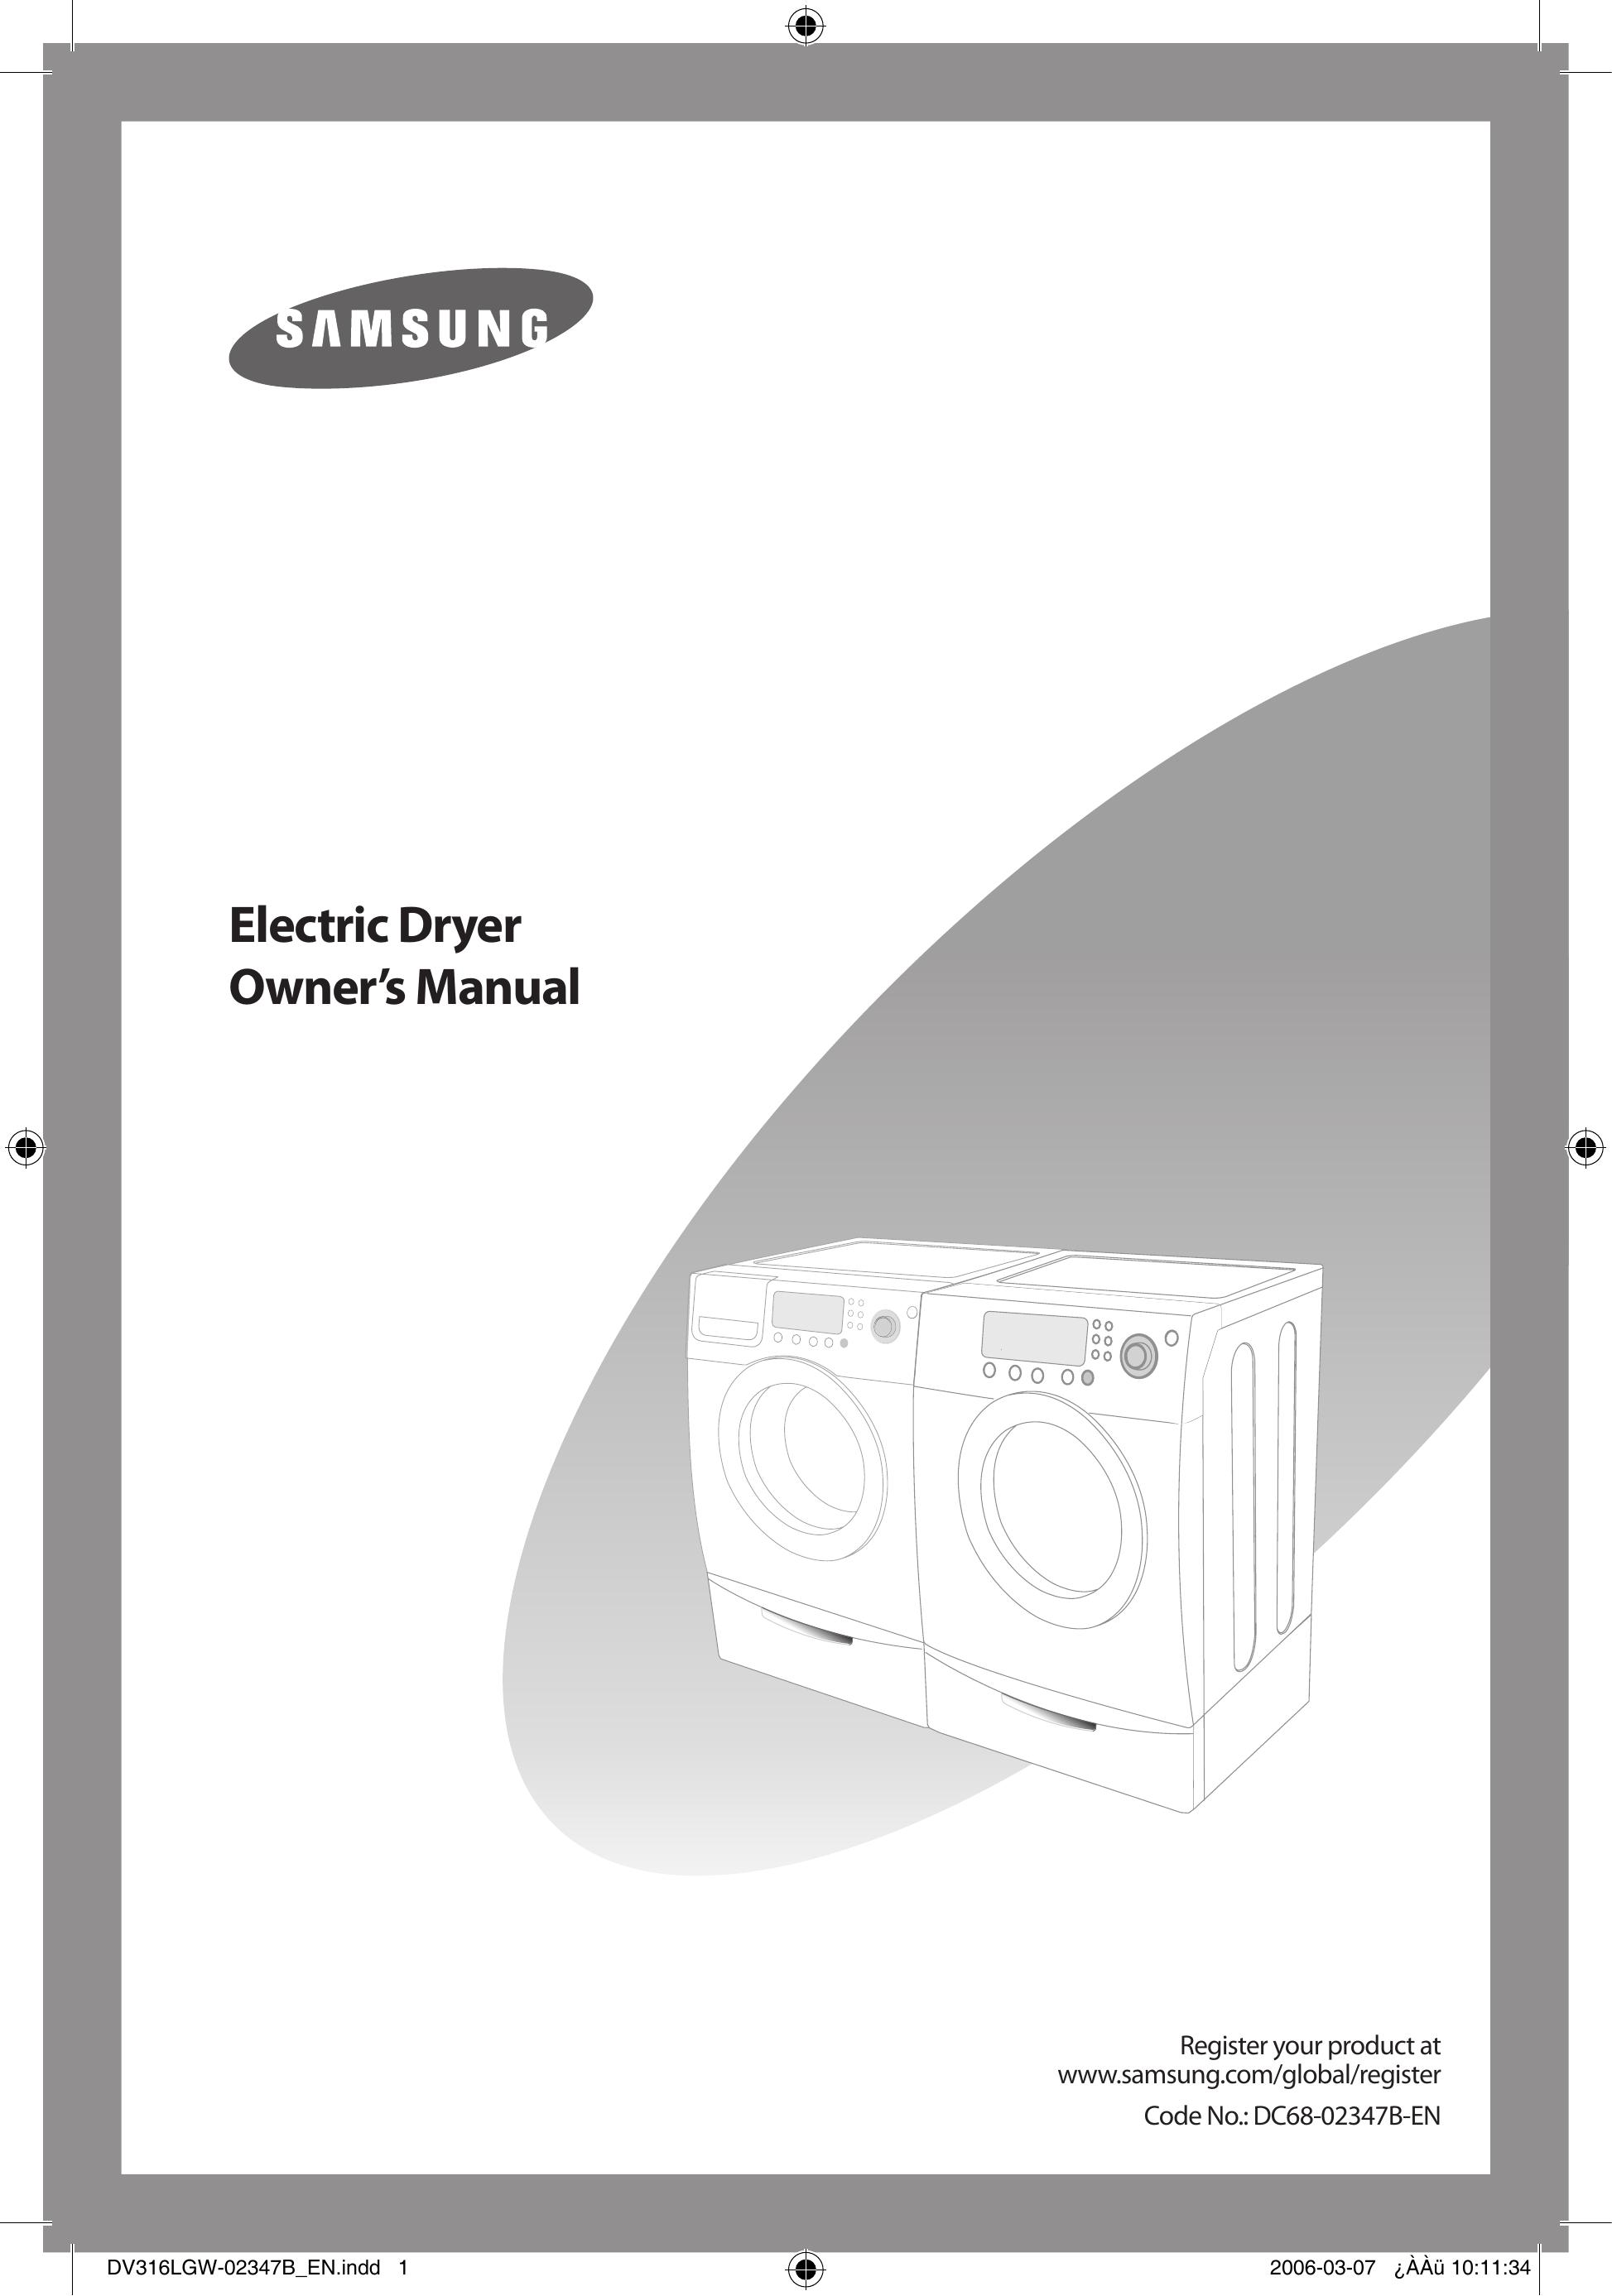 Samsung DC68-02347B-EN Clothes Dryer User Manual